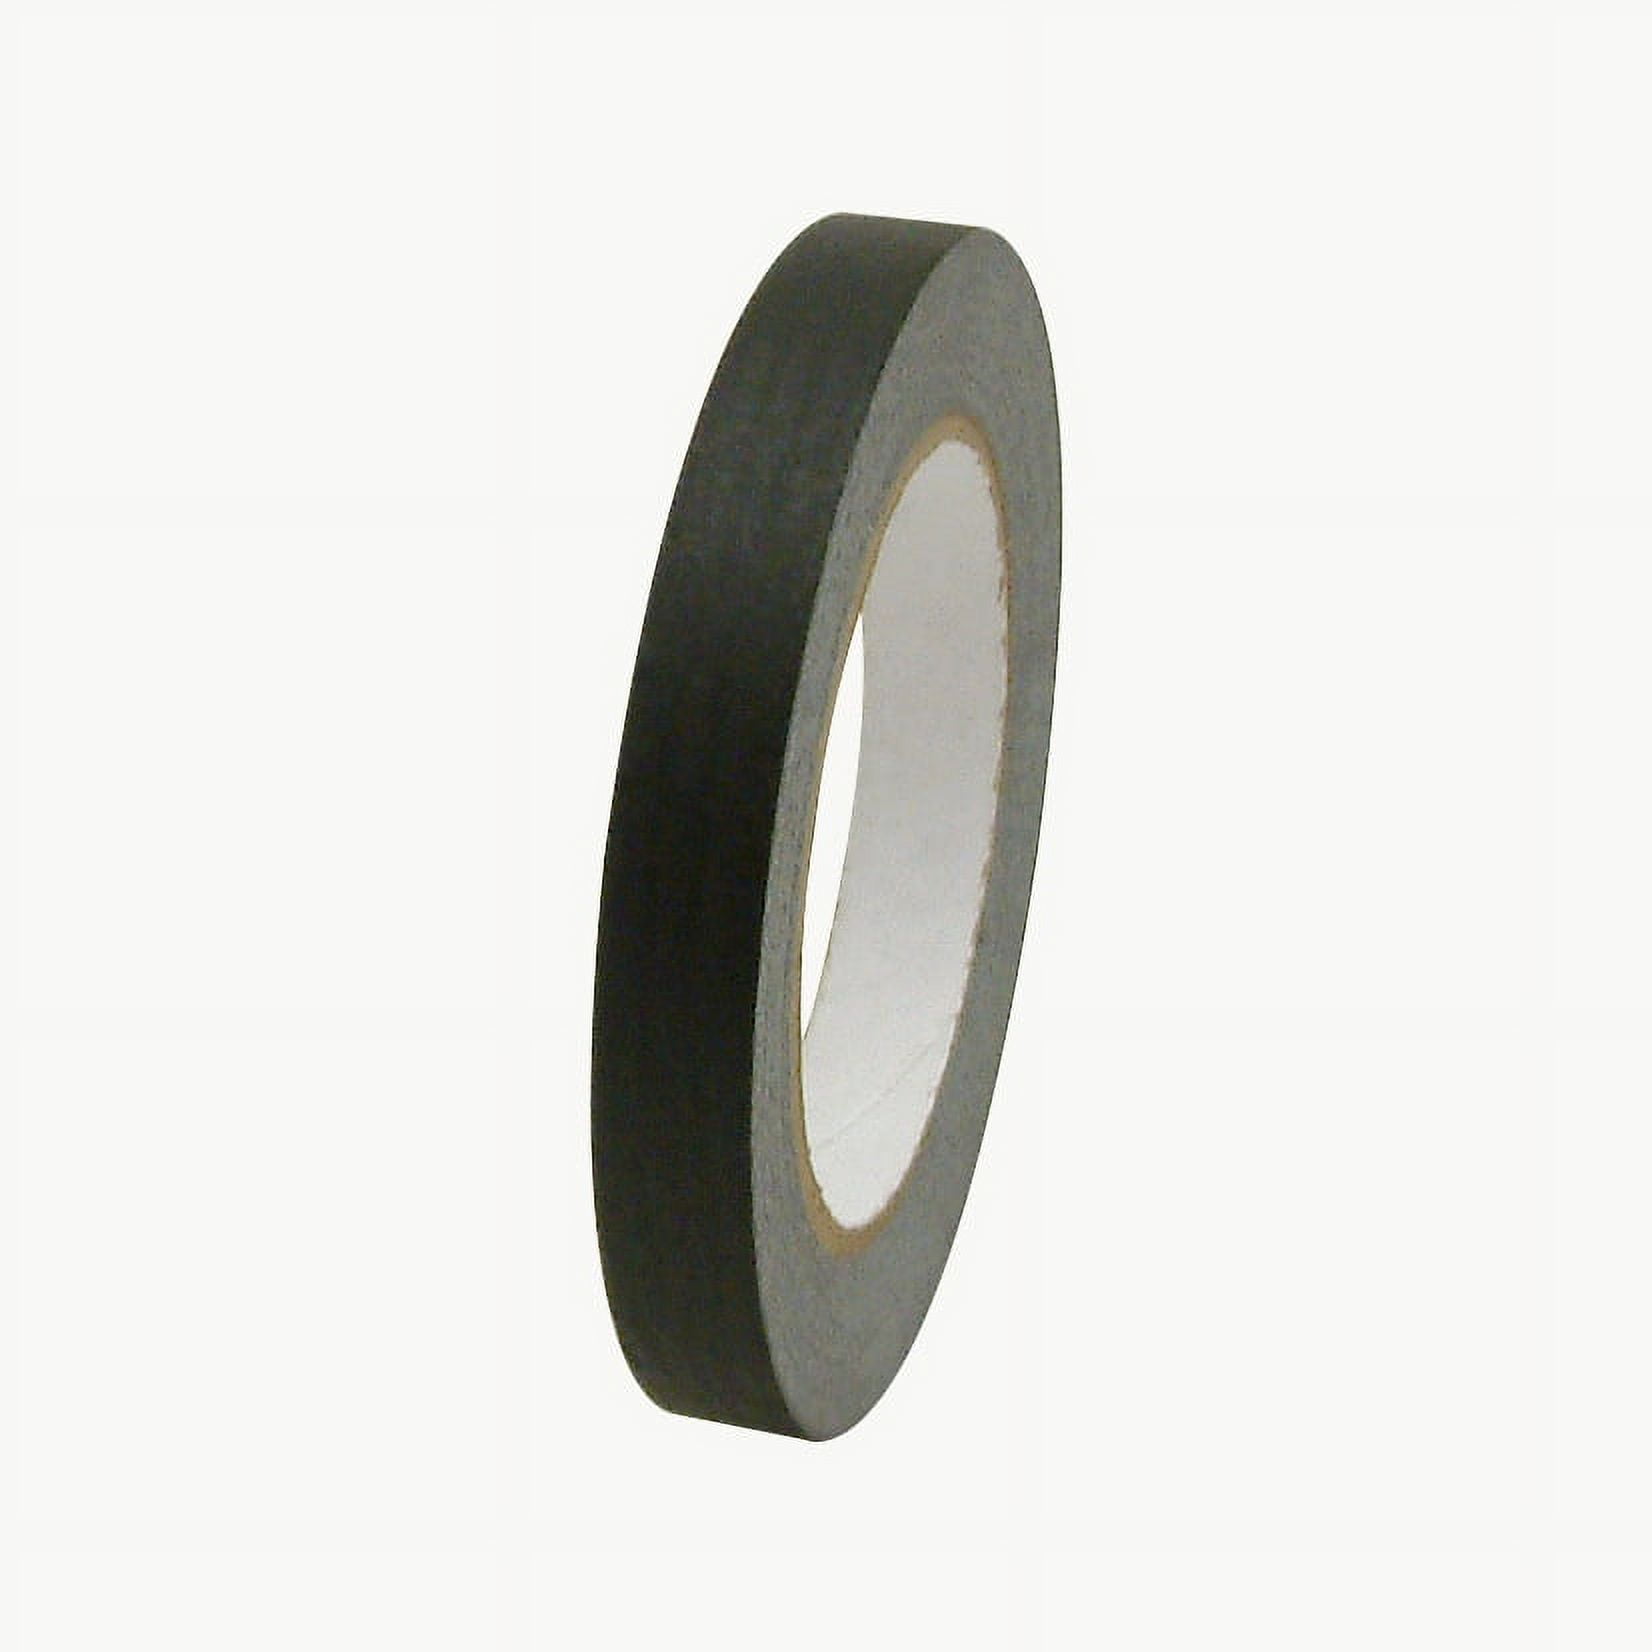 JVCC JV497 Black Masking Tape: 5/8 in. x 60 yds. (Black)